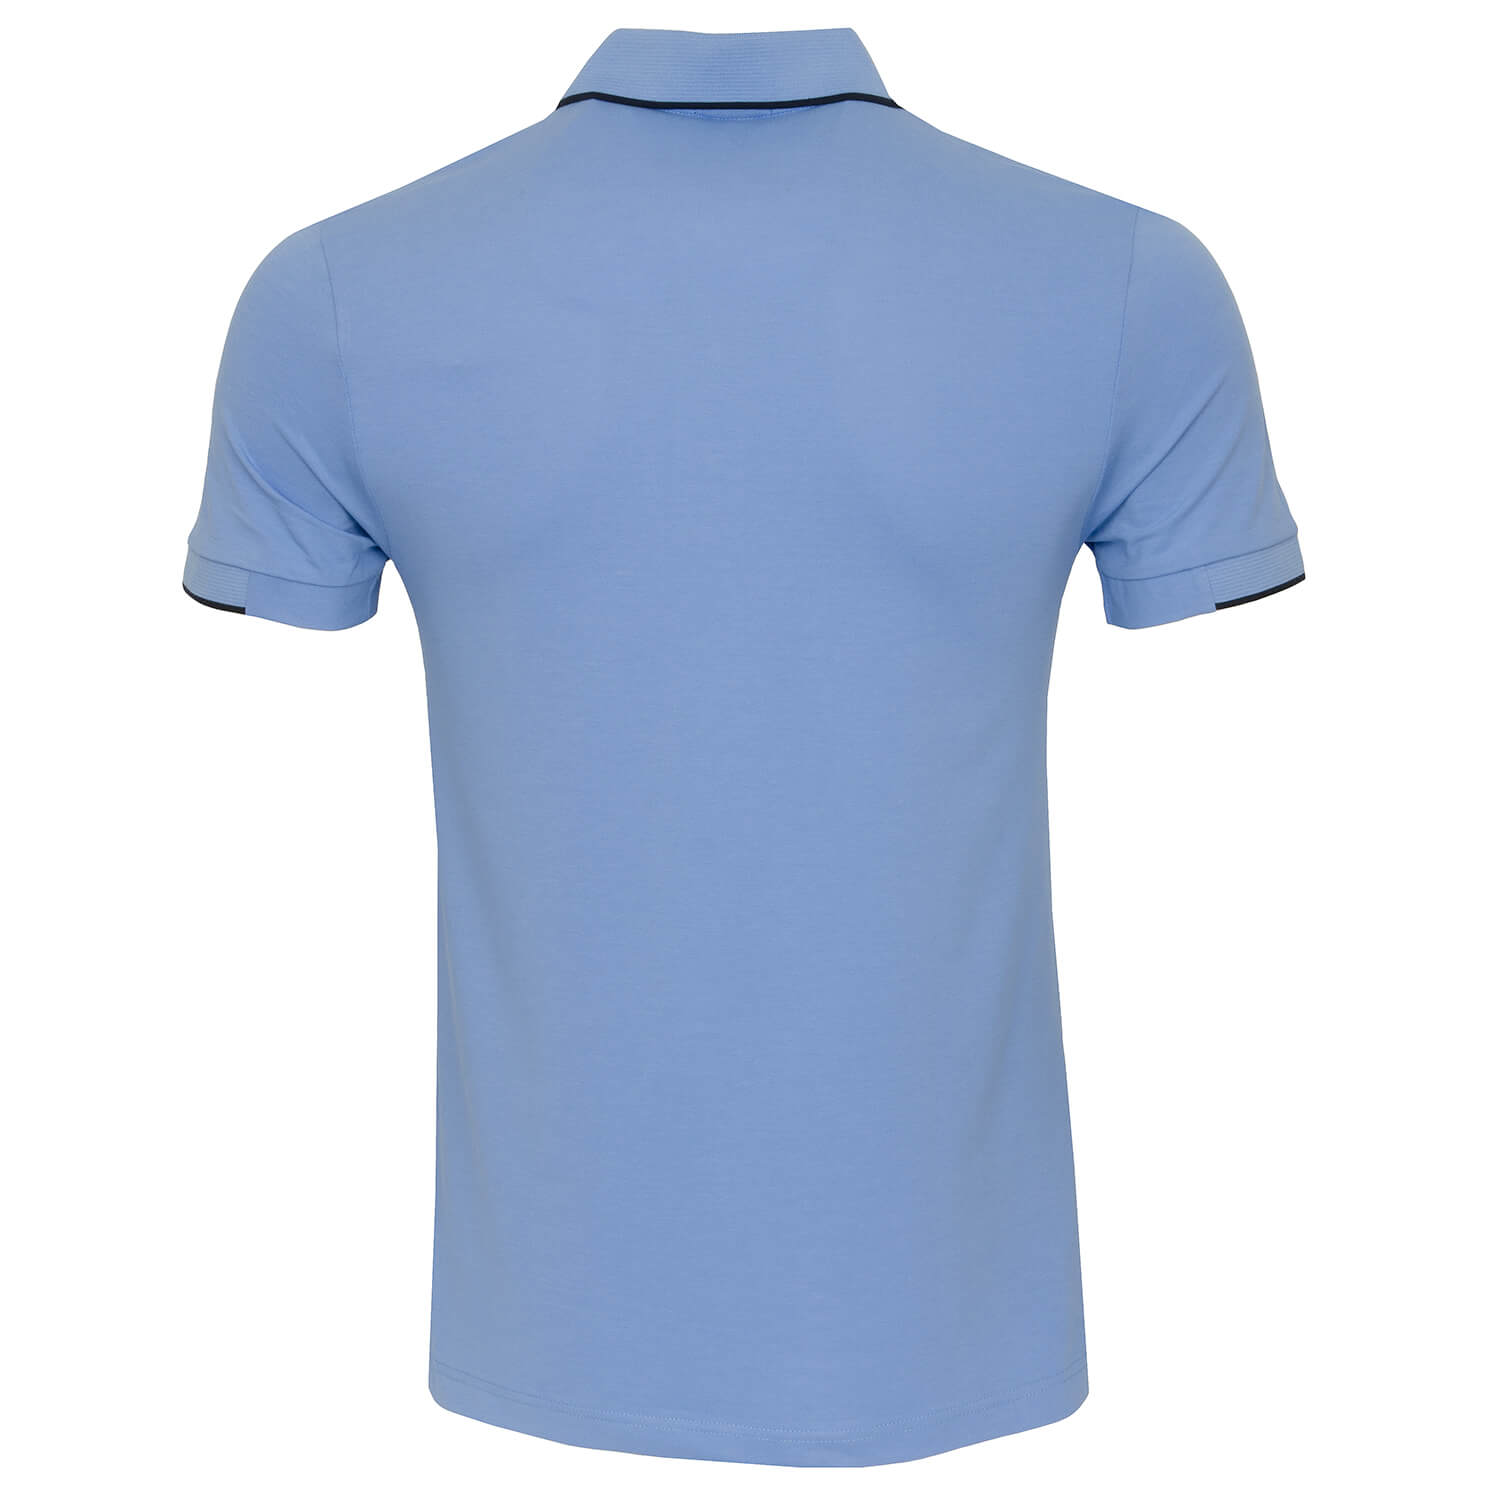 HUGO BOSS Paul Batch Polo Shirt Bright Blue 439 | Scottsdale Golf